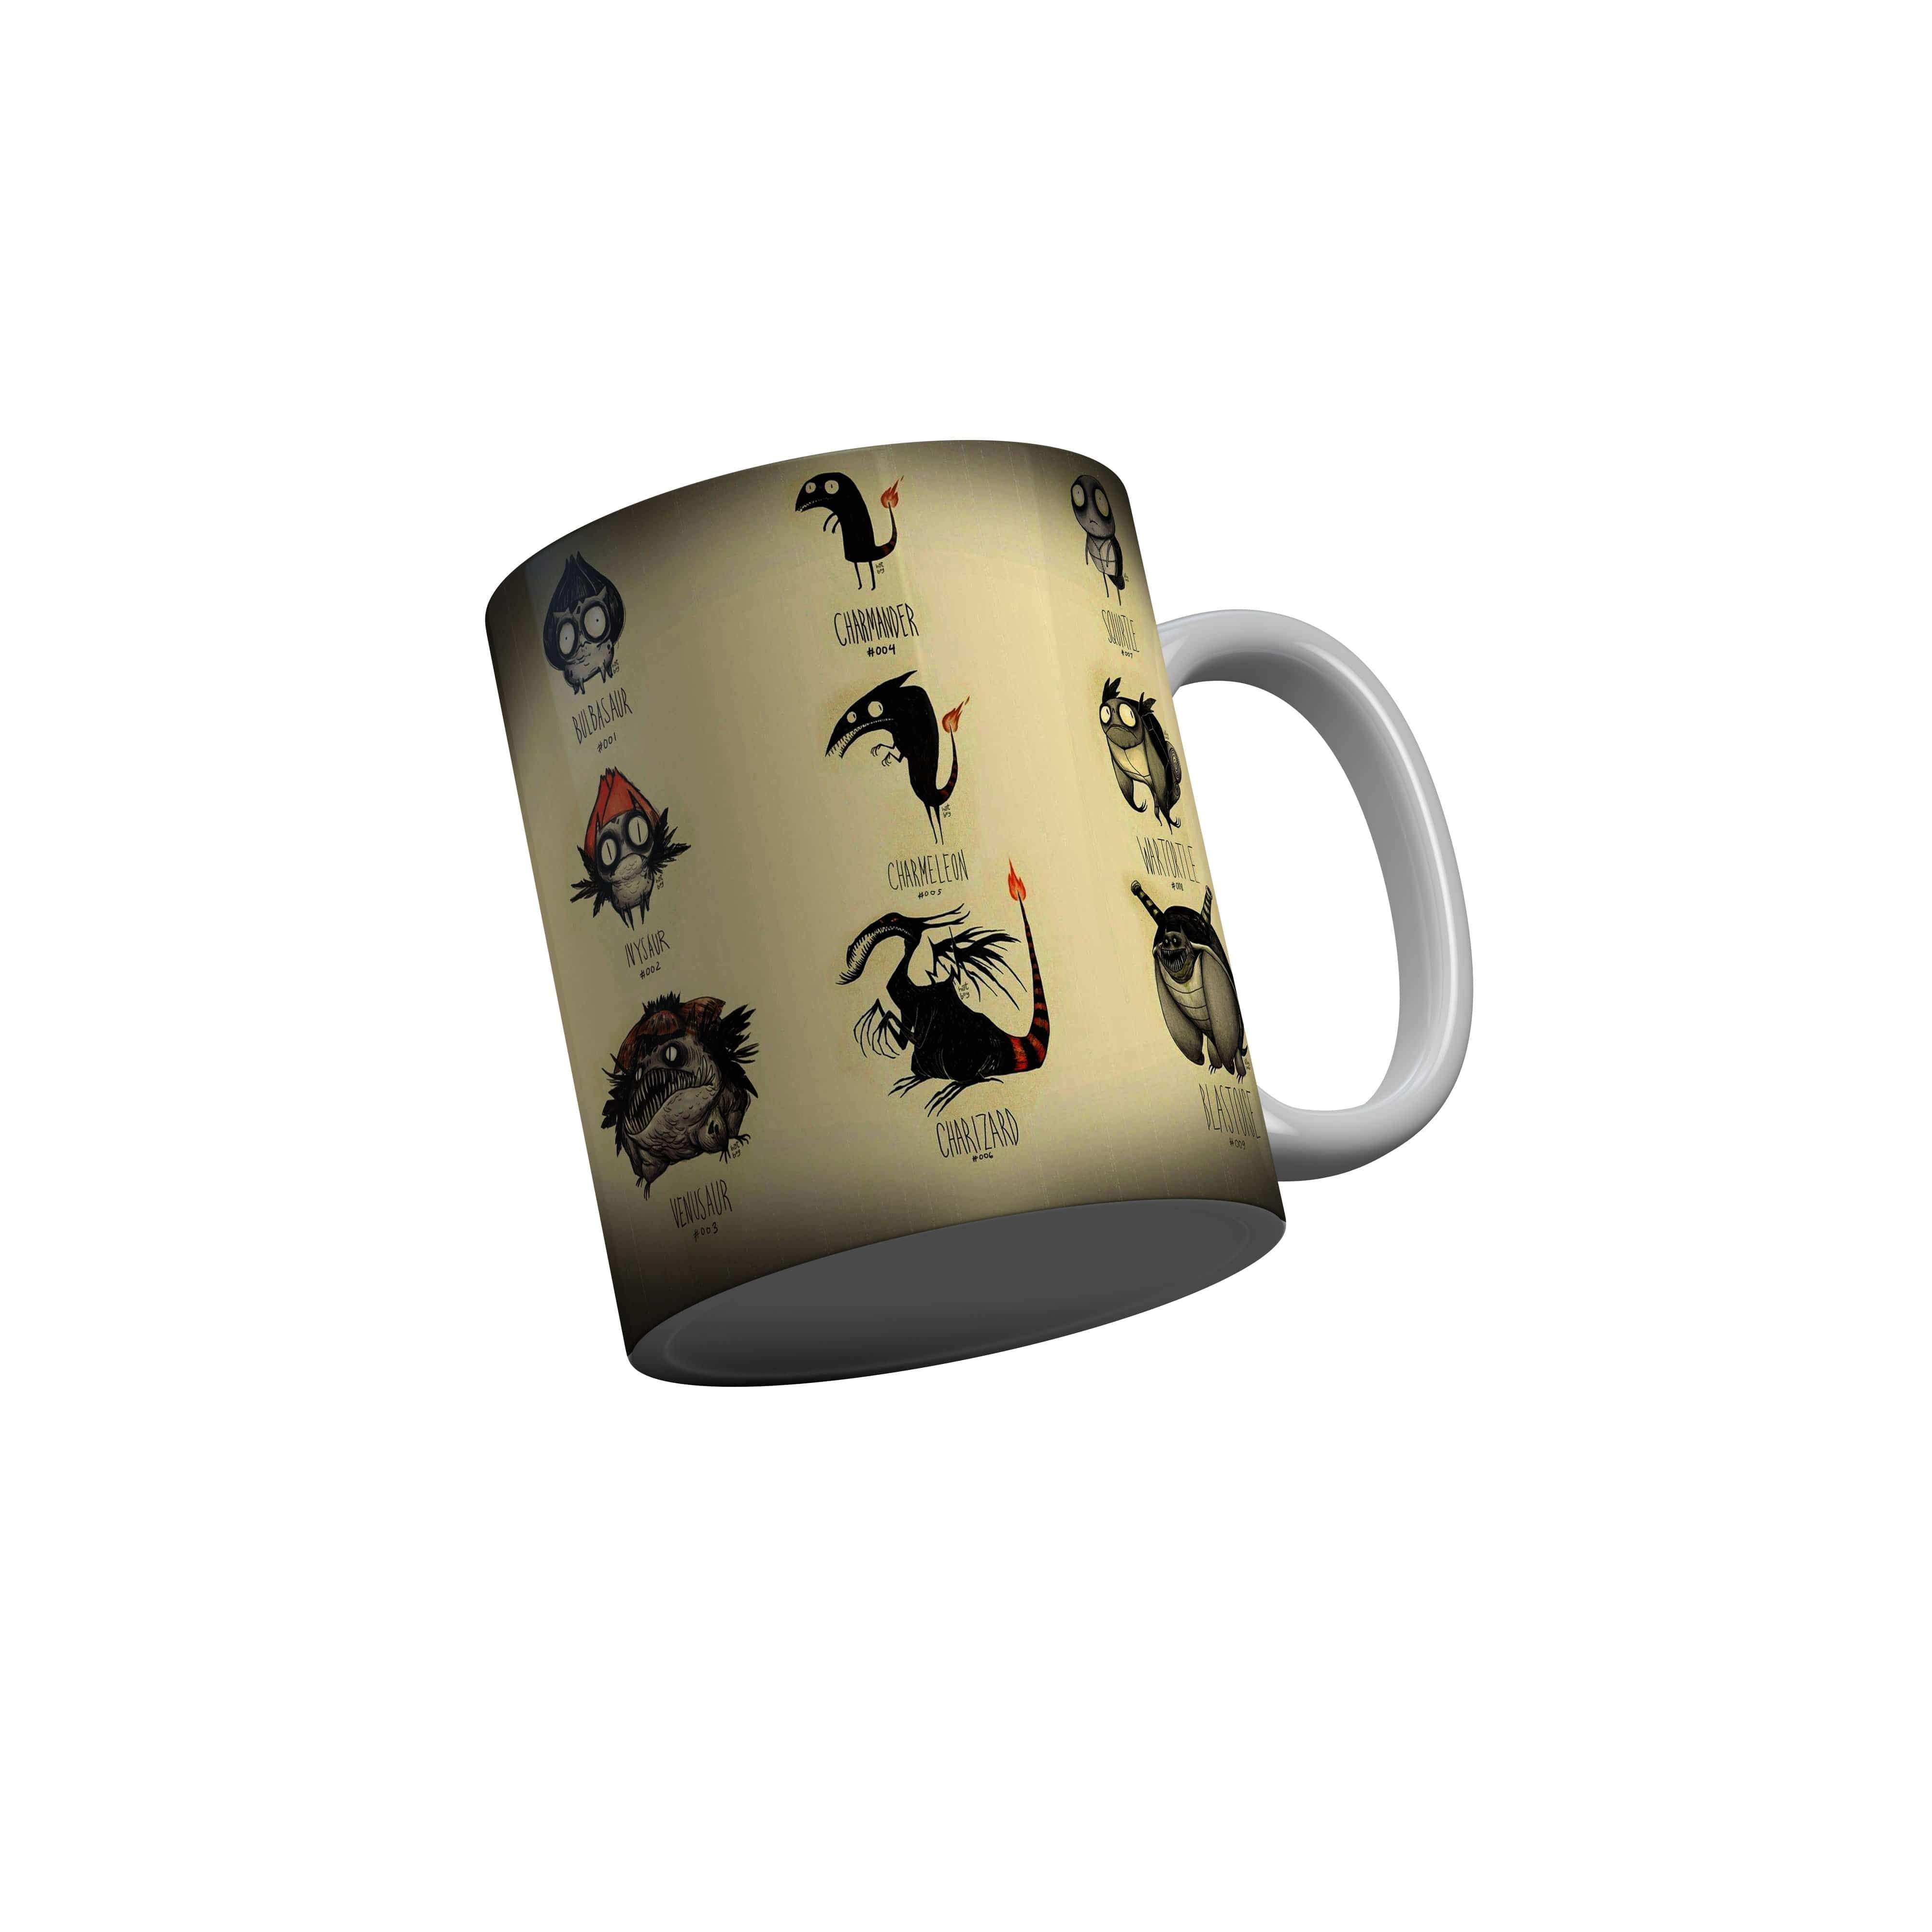 FashionRazor Attractive Cute Pokaemon Ceramic Coffee Mug Mug FashionRazor